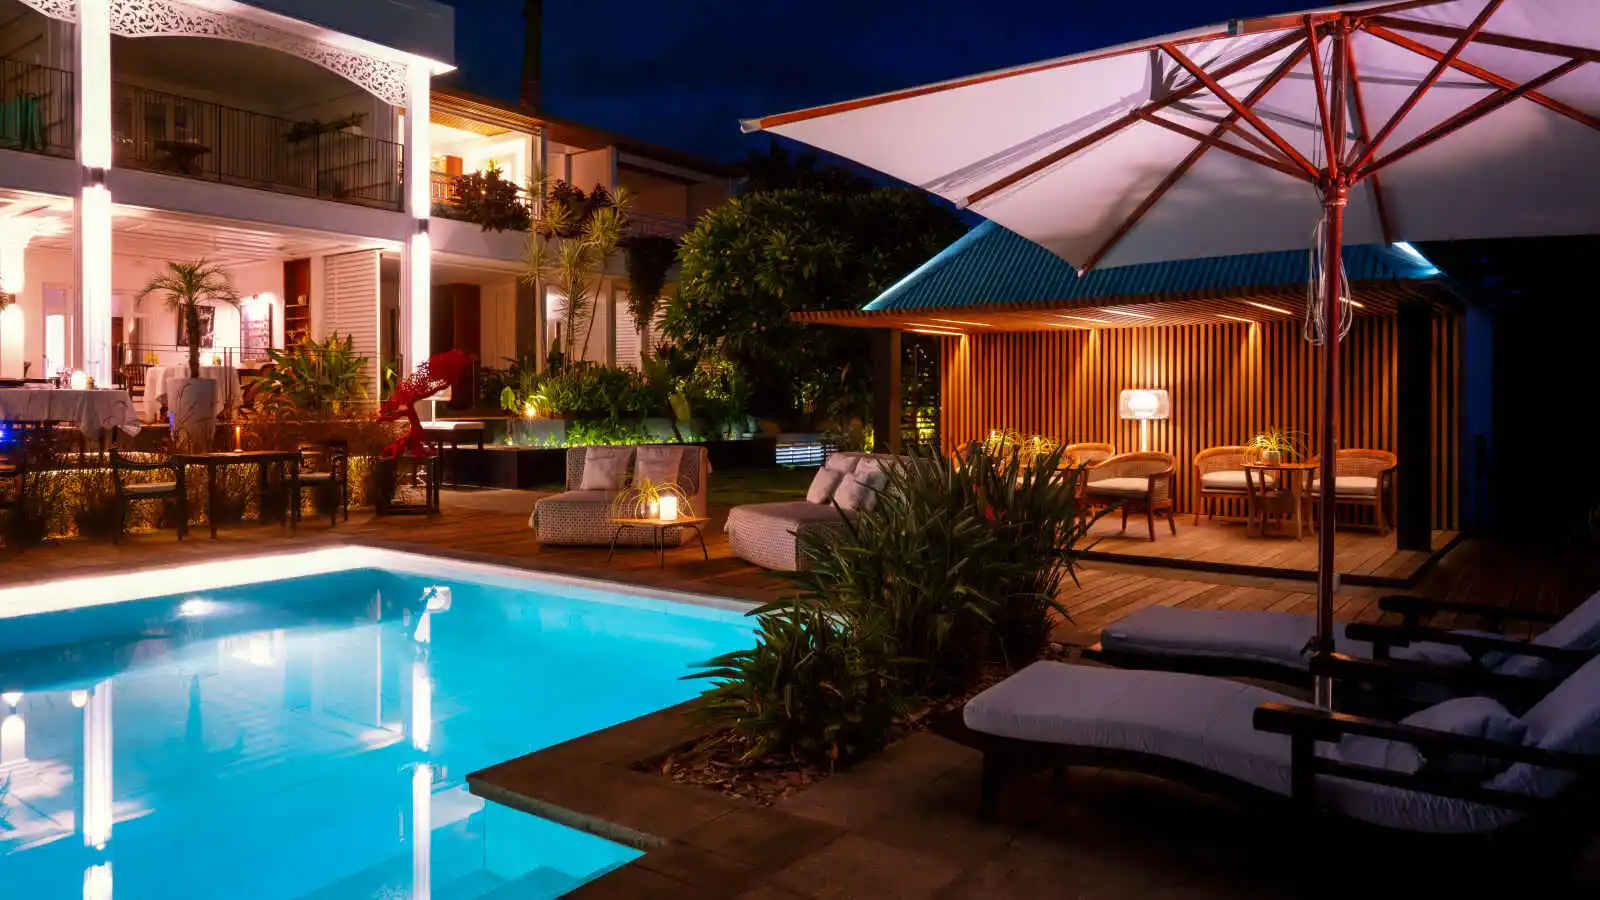 Terrasse et piscine de l'hôtel de nuit, Blue Margouillat Seaview Hotel